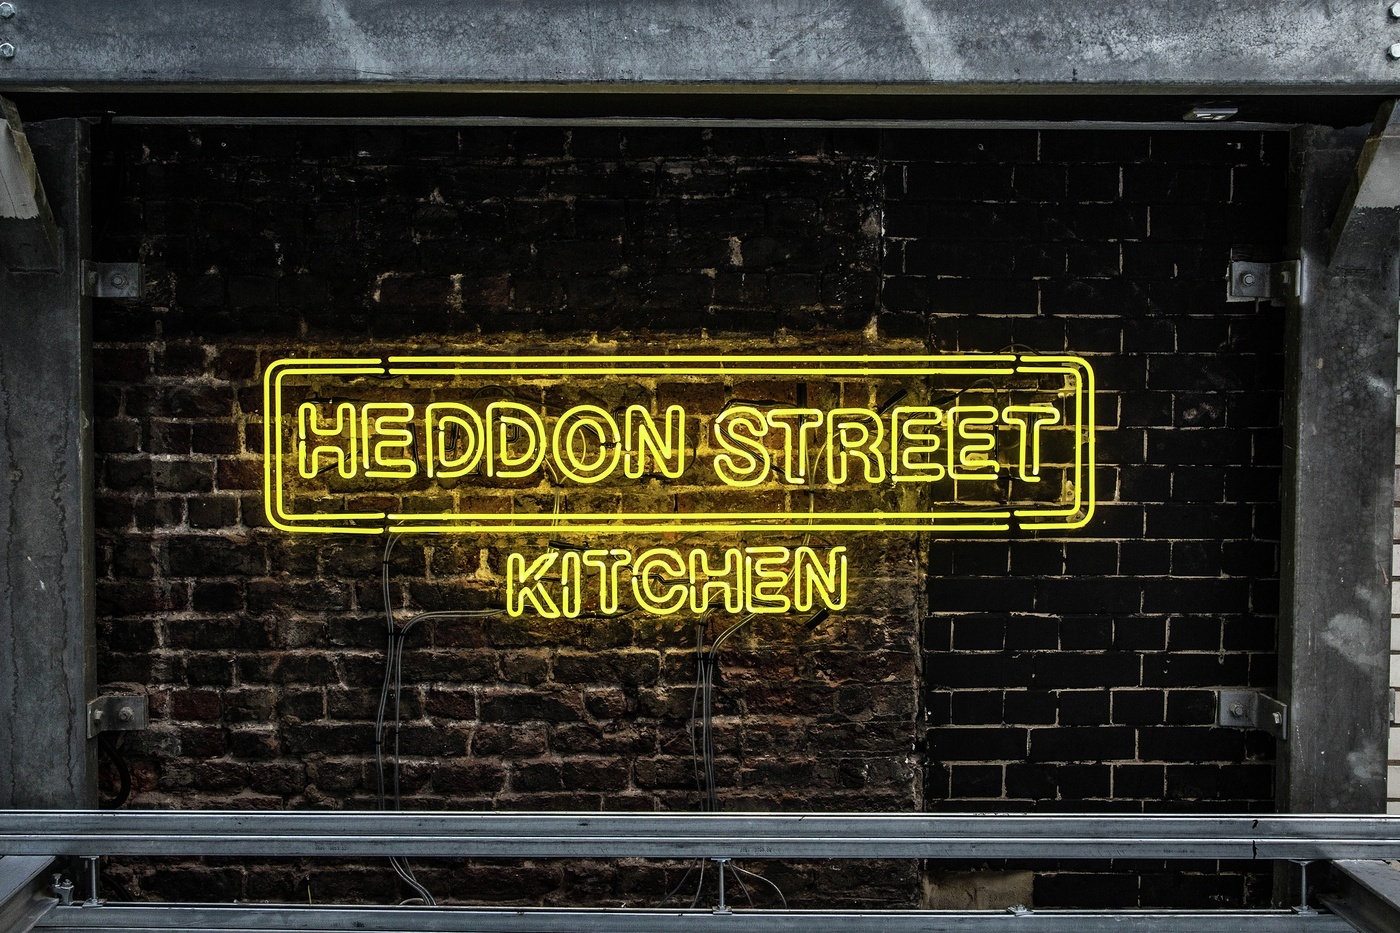 heddon street kitchen vs heddon street kitchen table